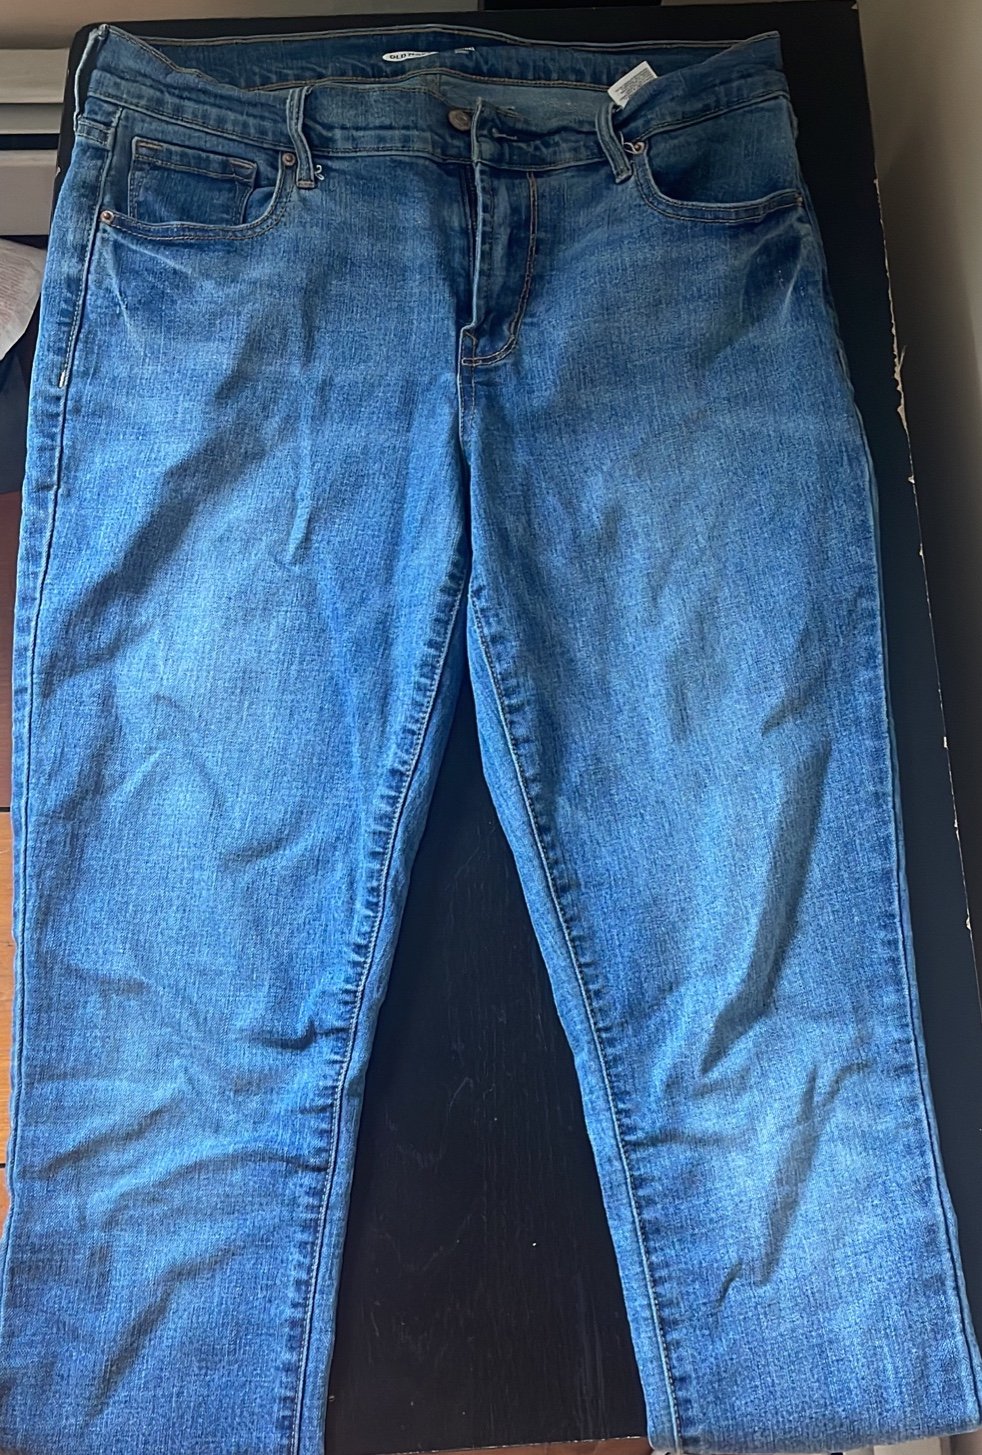 Buy Old navy skinny jeans jXUYz9A0Y Factory Price